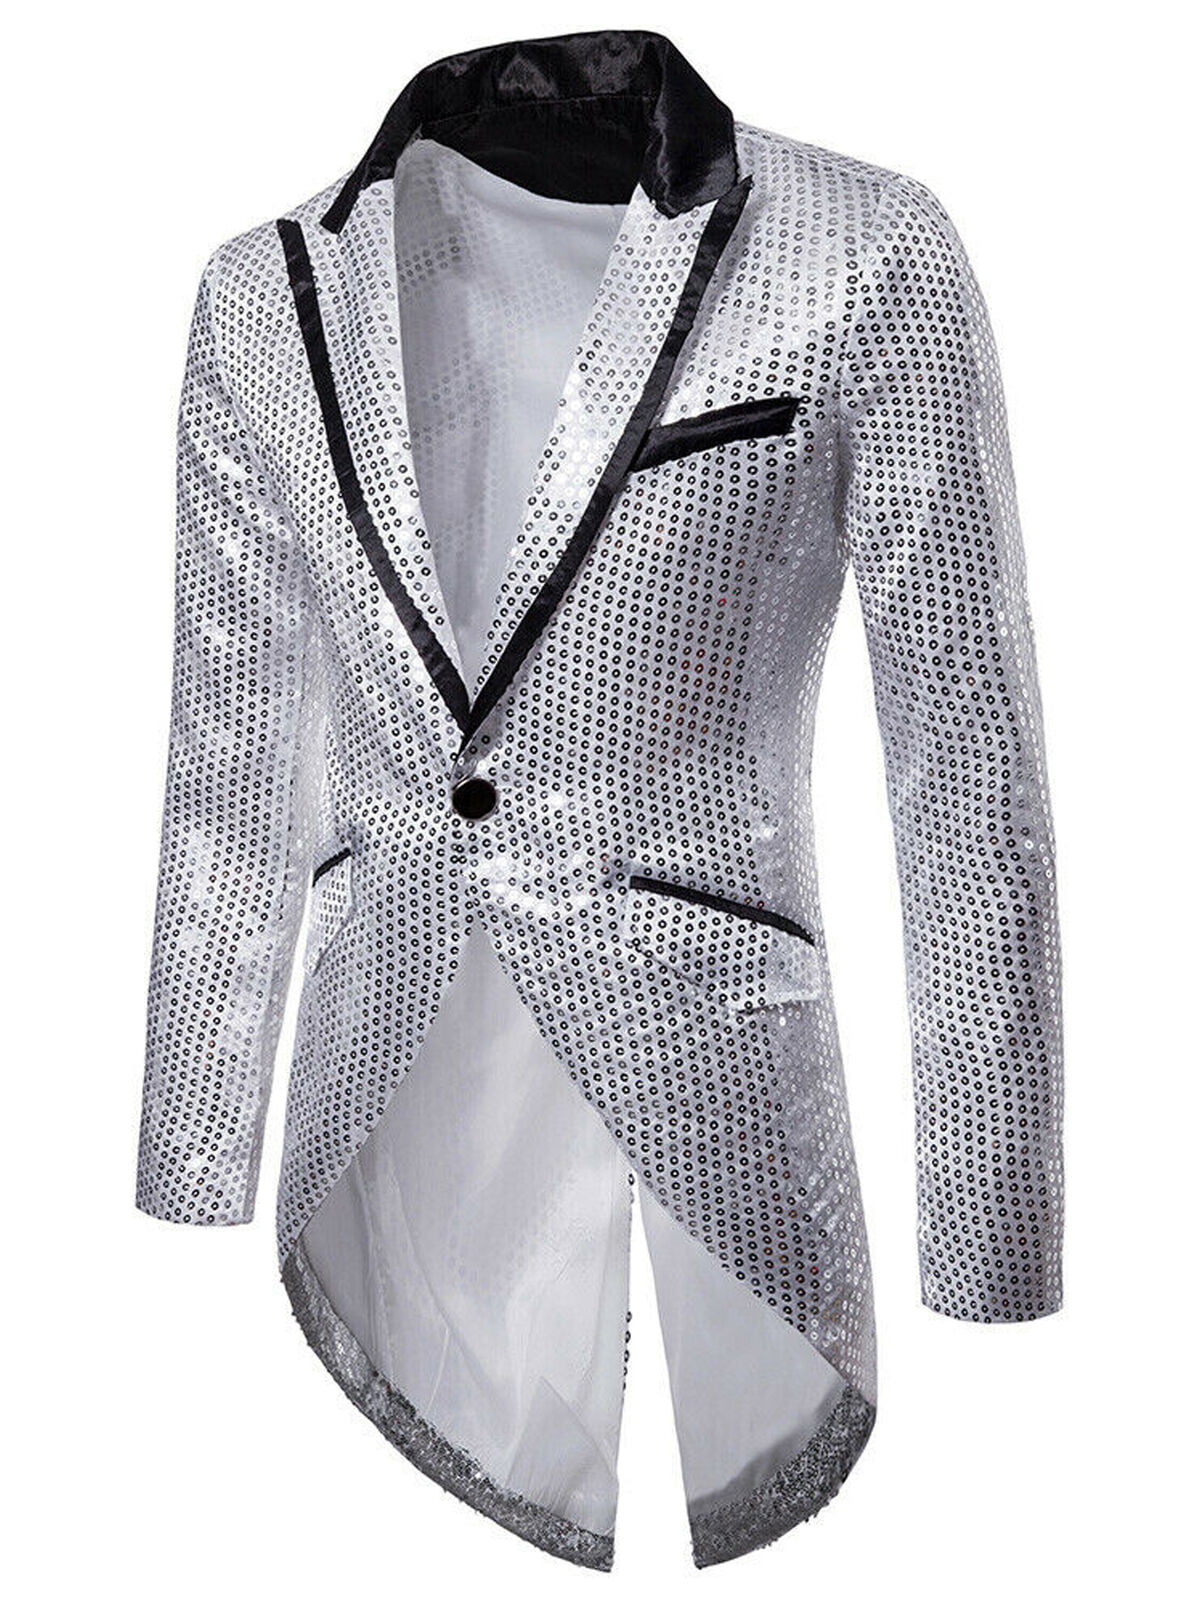 Tootless-Men Shirt Leisure Sequin Blazer Club Wedding Tuxedo Suits Jacket 